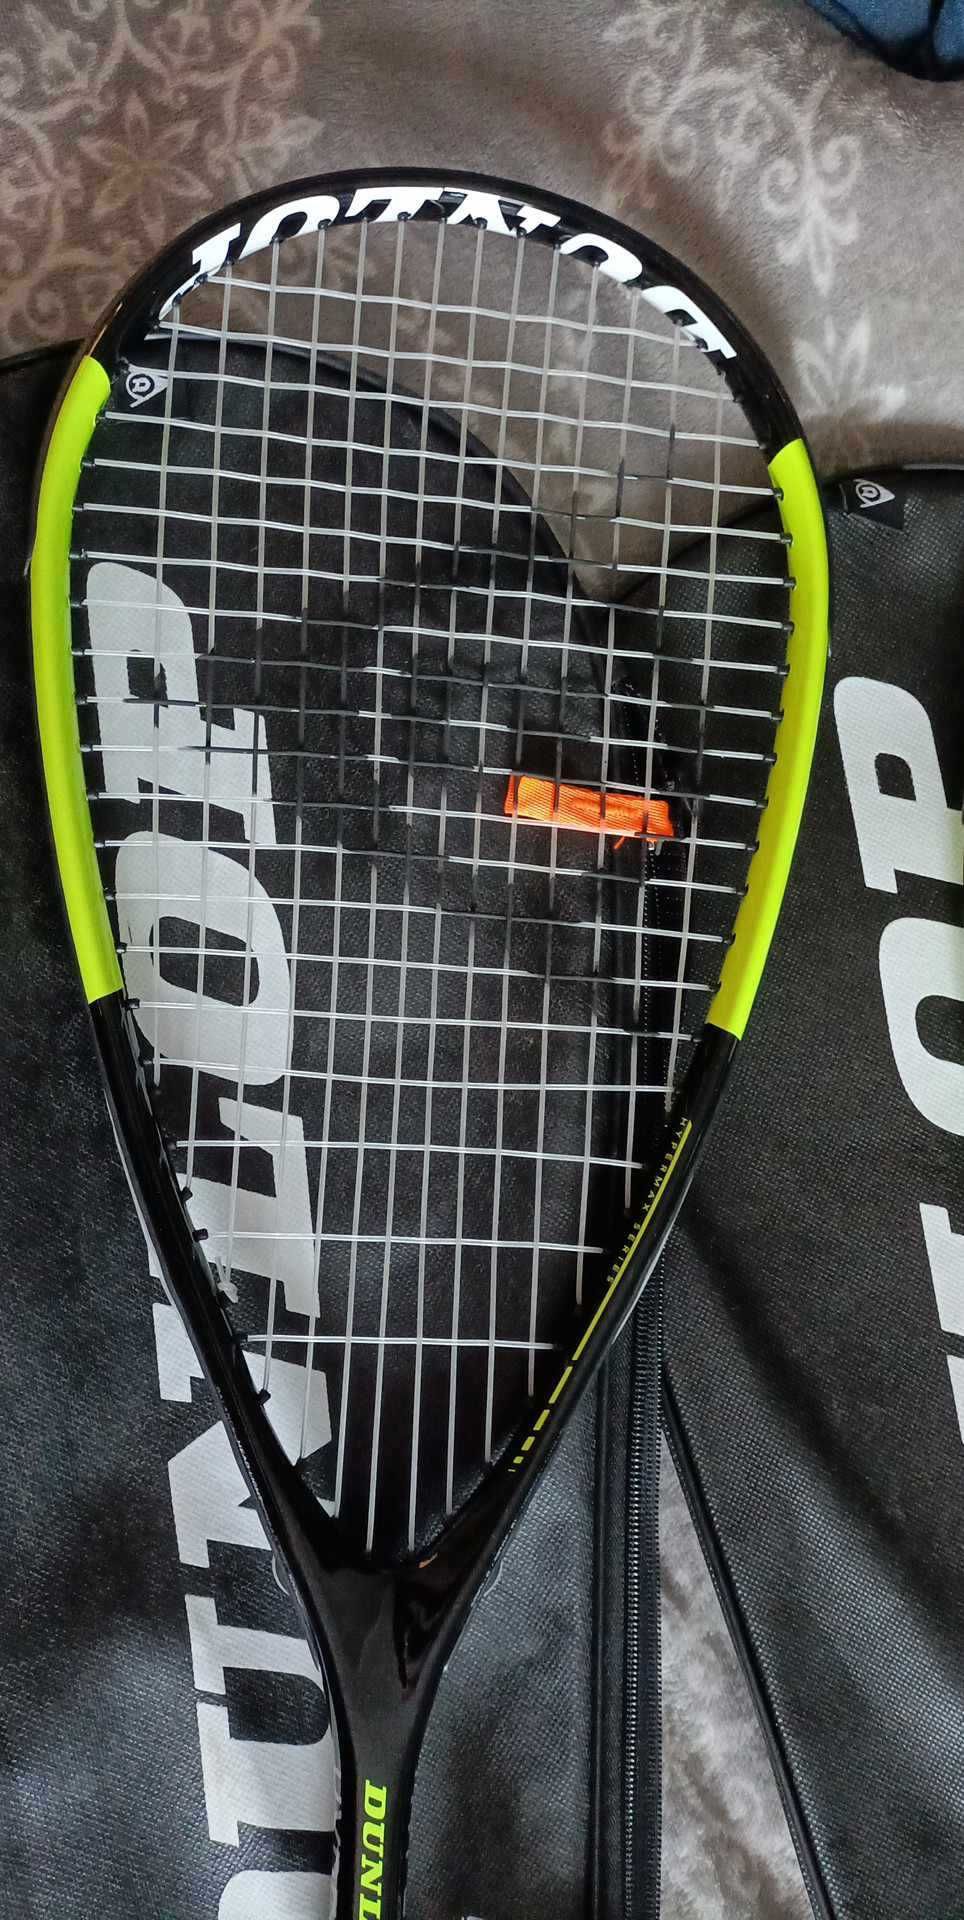 Dunlop hypermax pro rakieta do squasha